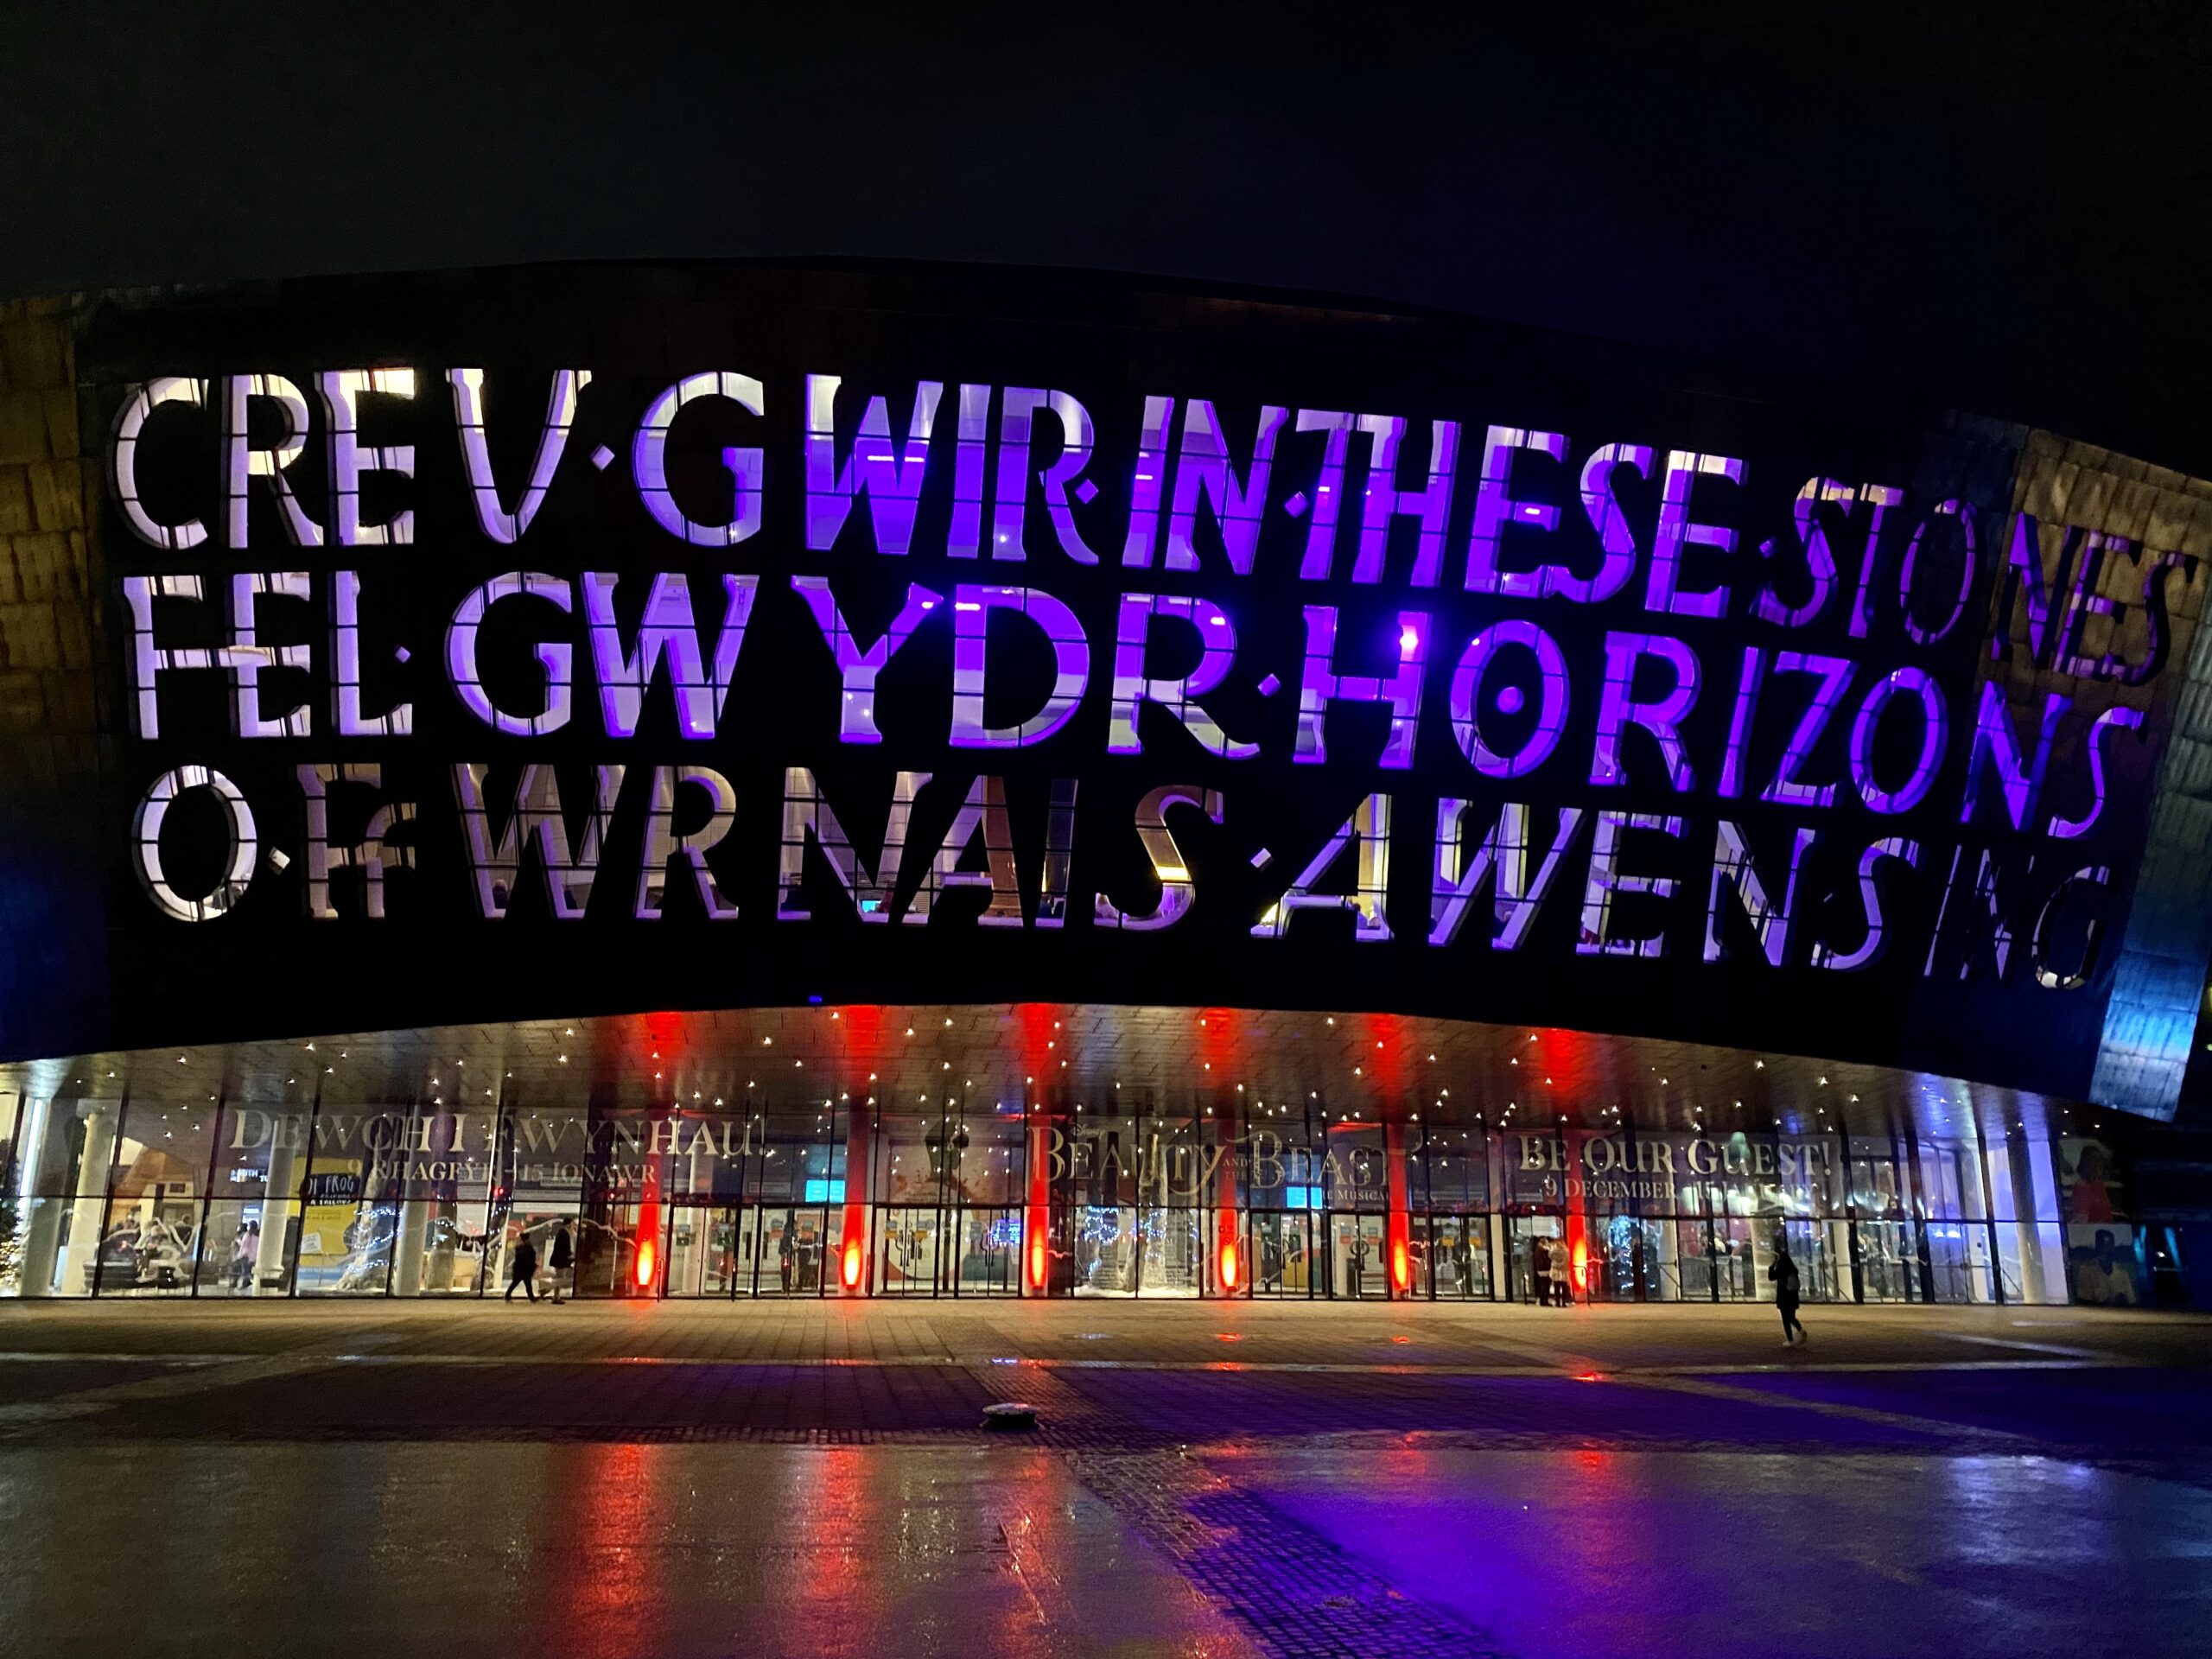 Wales Millennium Centre Cardiff Bay 